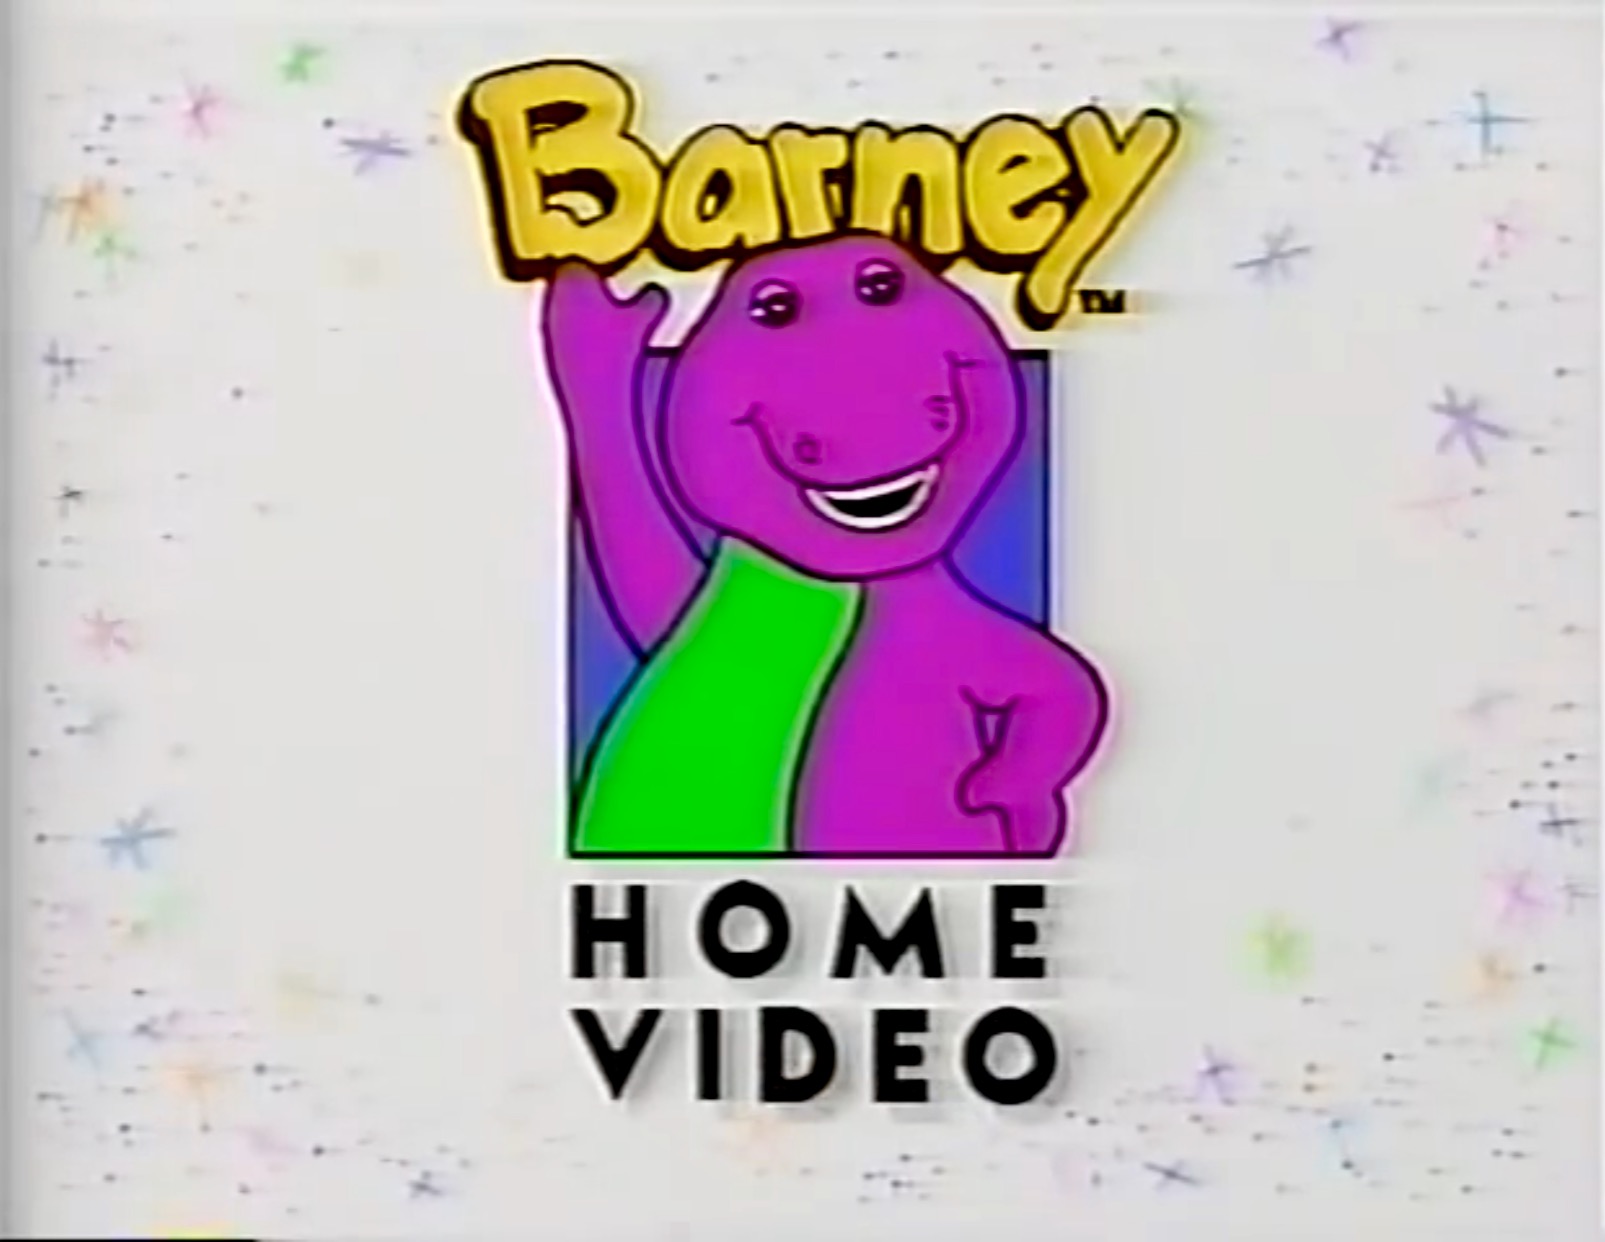 barney logo